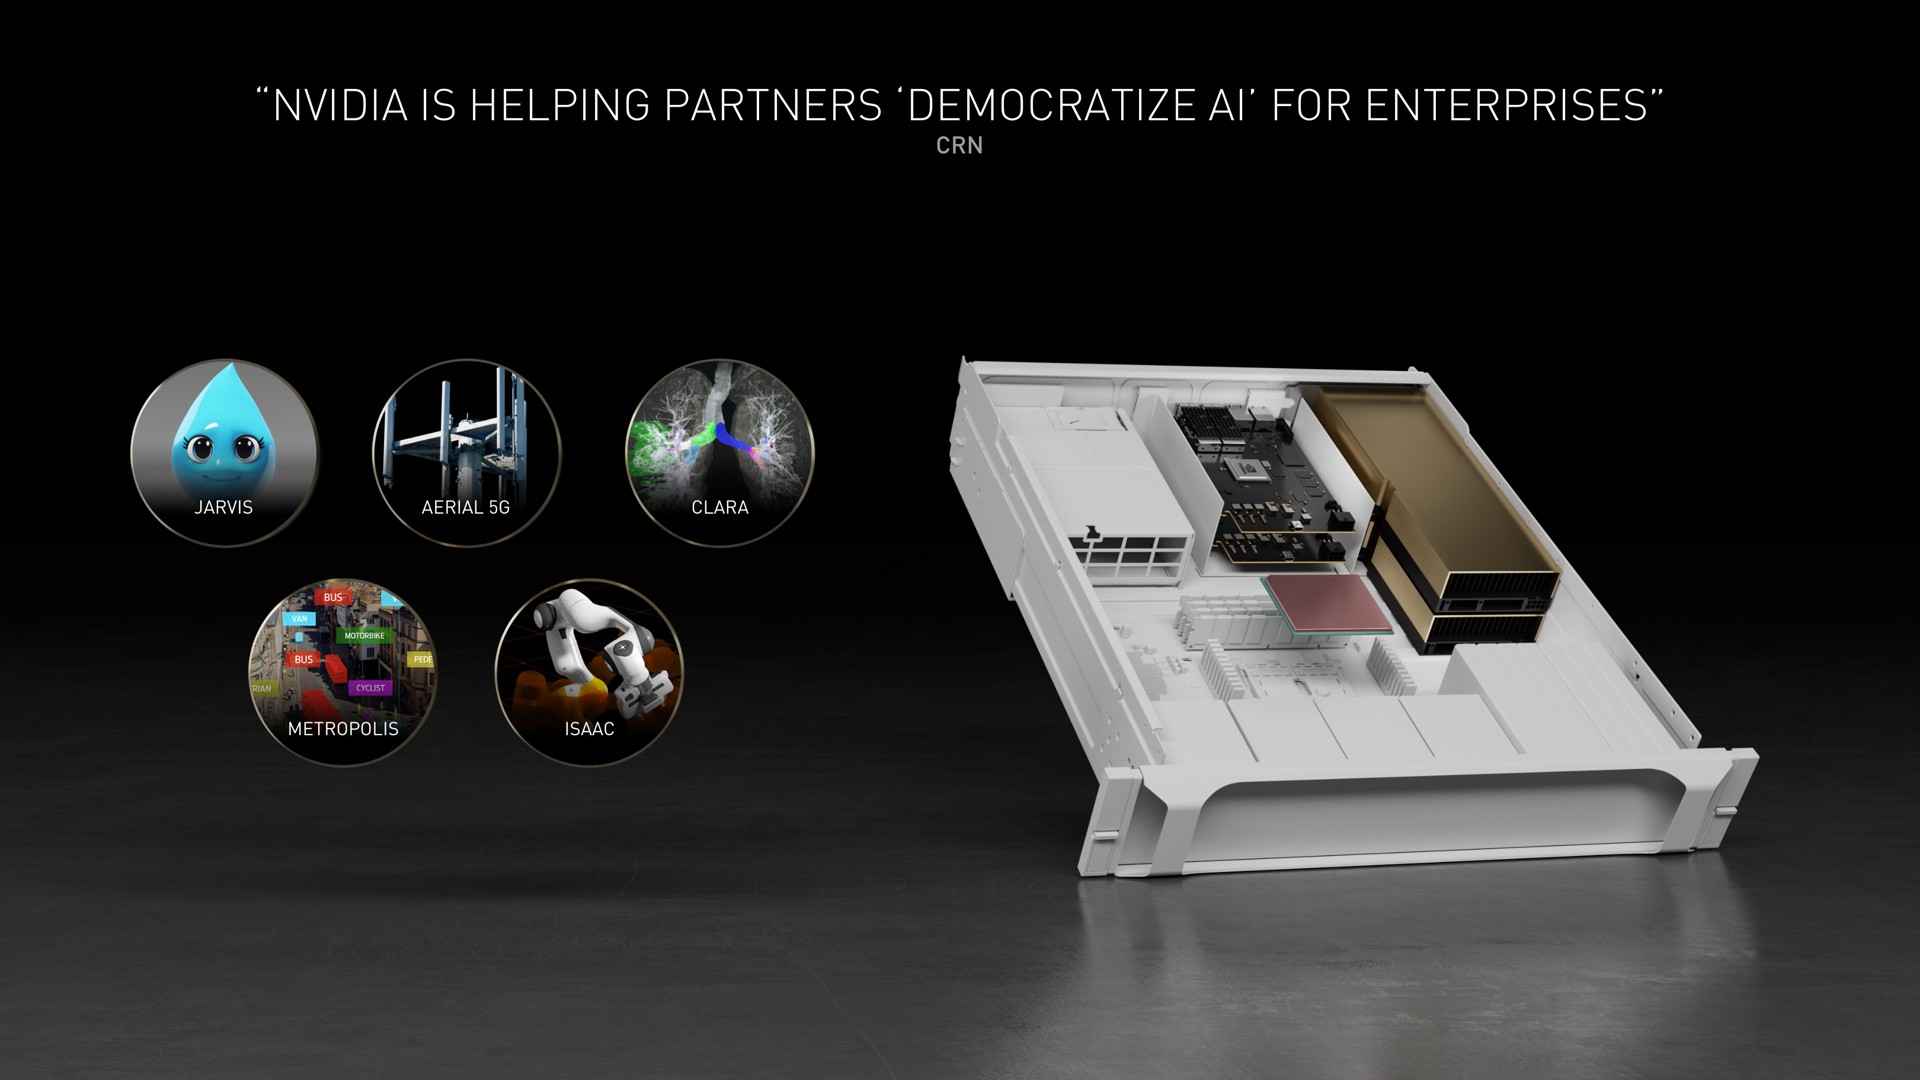 is helping partners democratize for enterprises | NVIDIA